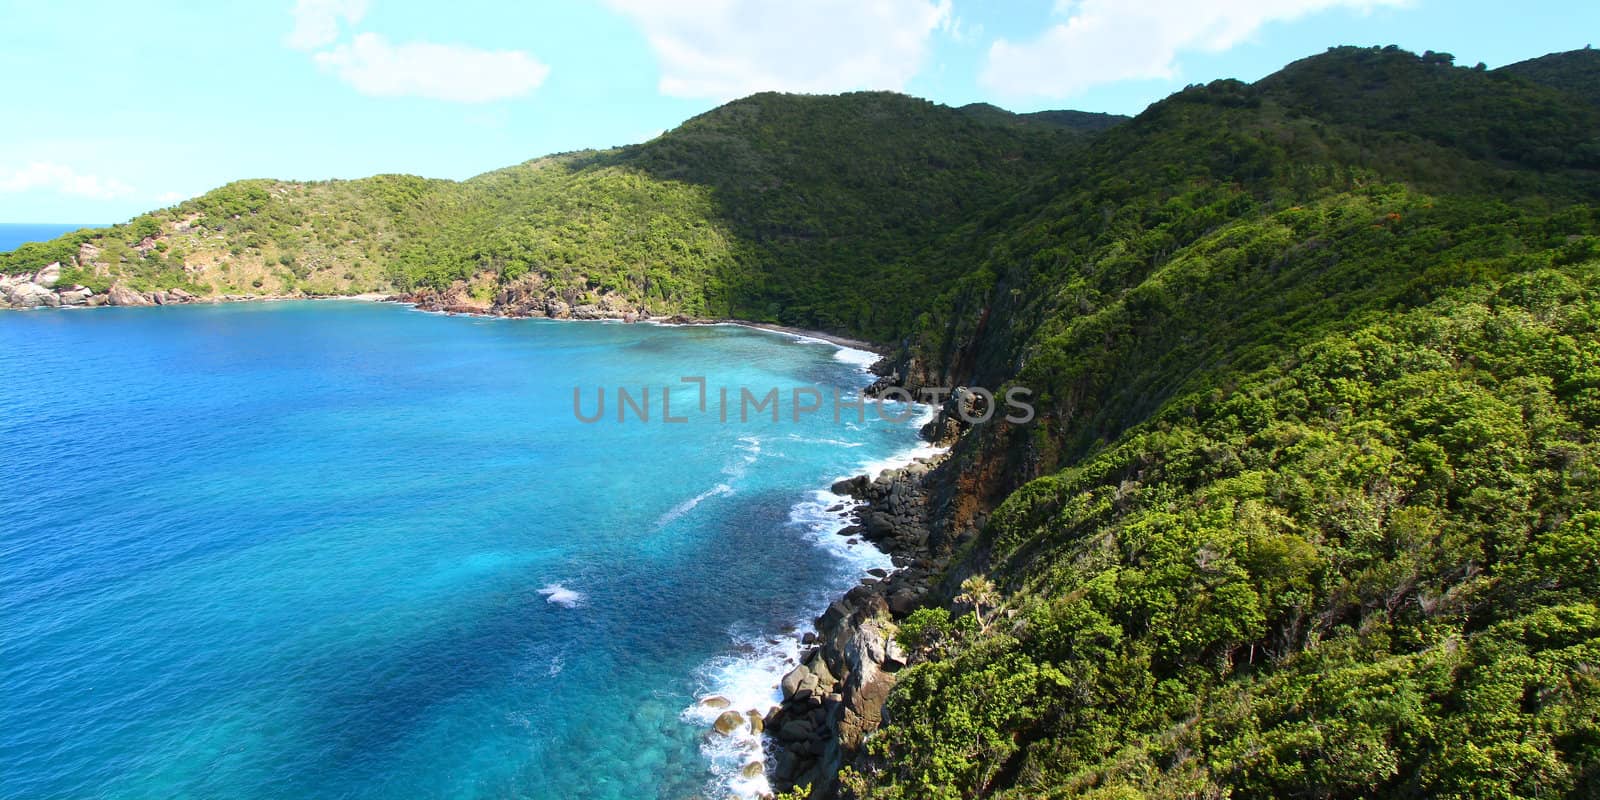 View of the beautiful Shark Bay National Park of Tortola - BVI.